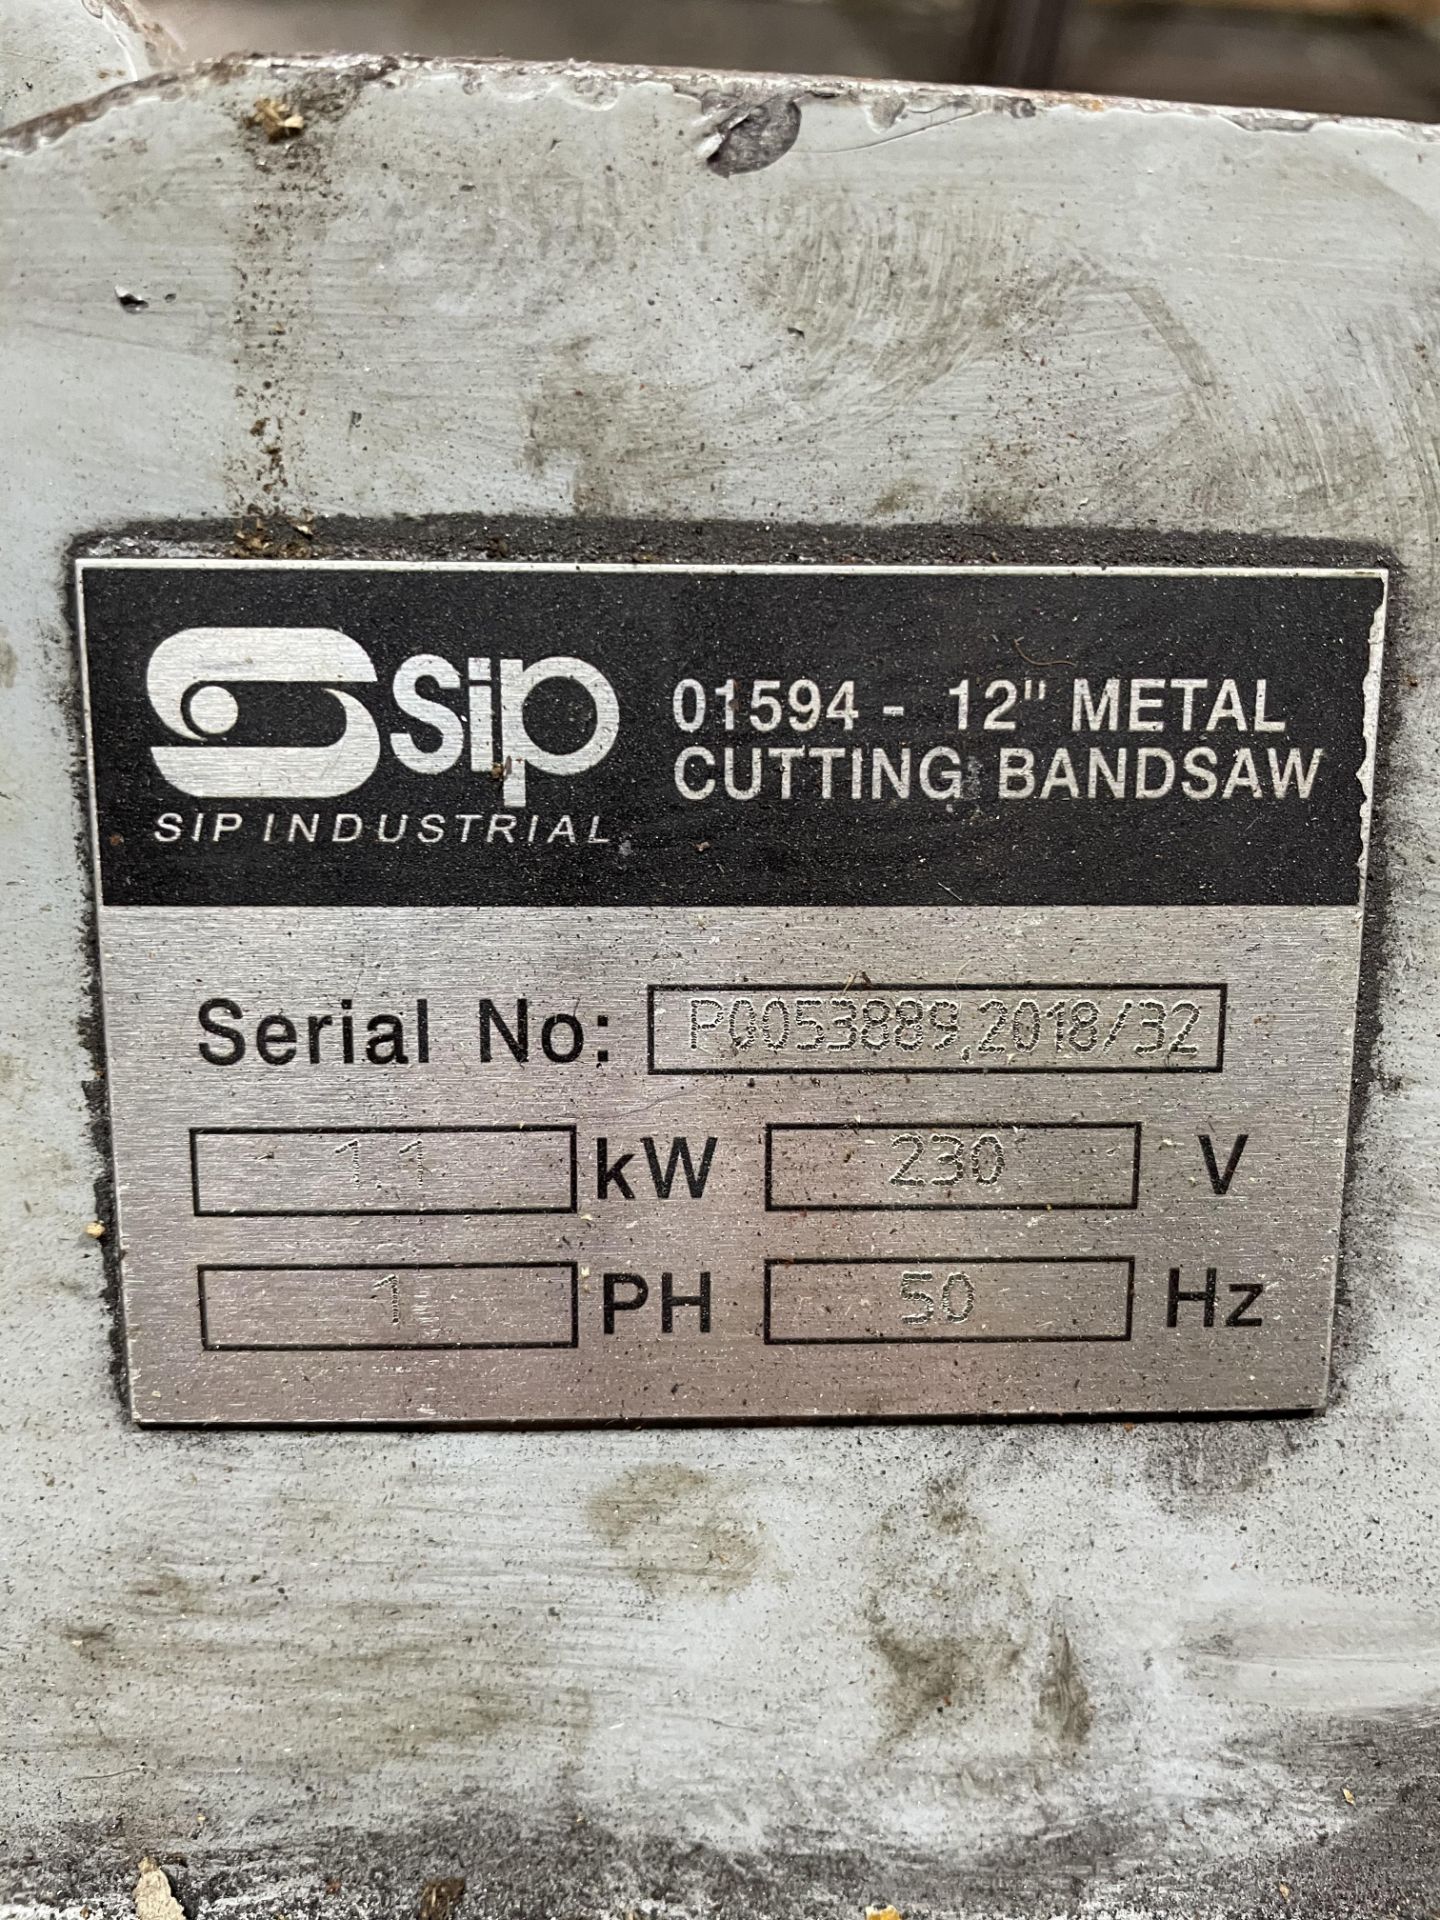 SIP 12" Metal Cutting Bandsaw - Serial P0053889 2018/32 - 230V. - Image 4 of 4